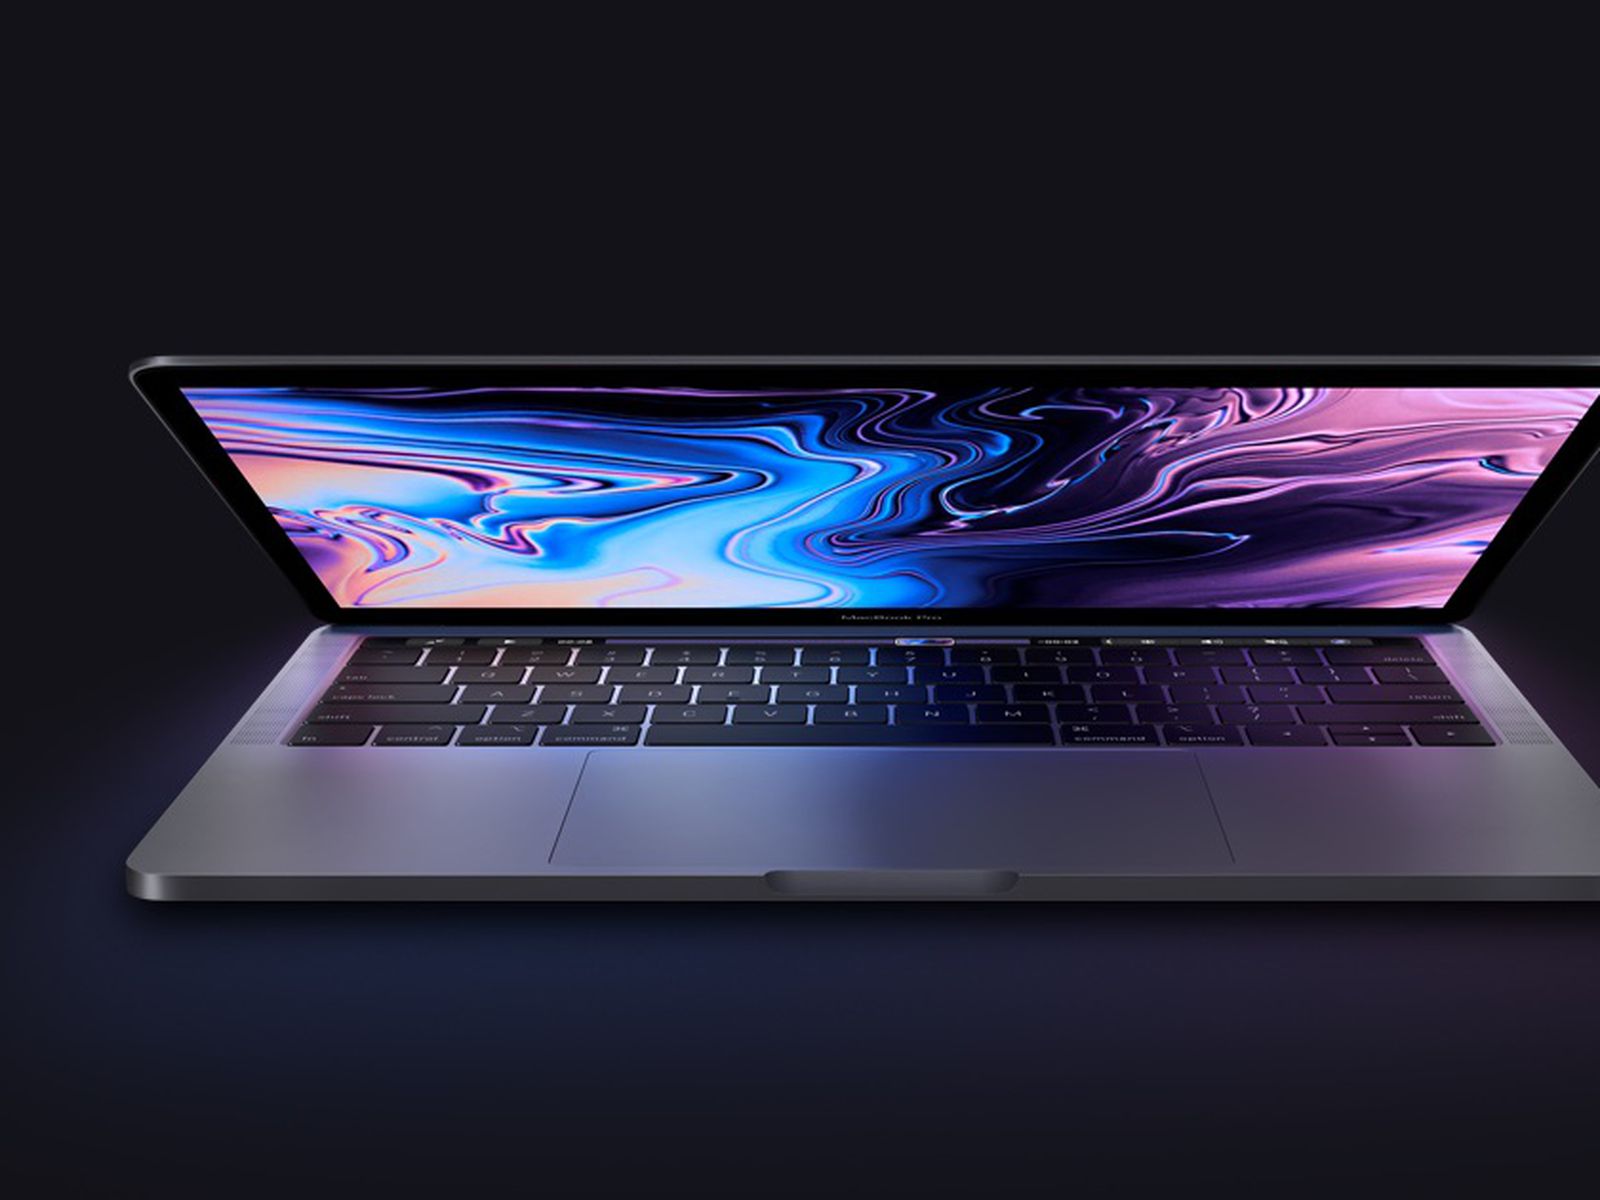 Jon Prosser: Apple to Announce 13-Inch MacBook Pro Refresh Today 